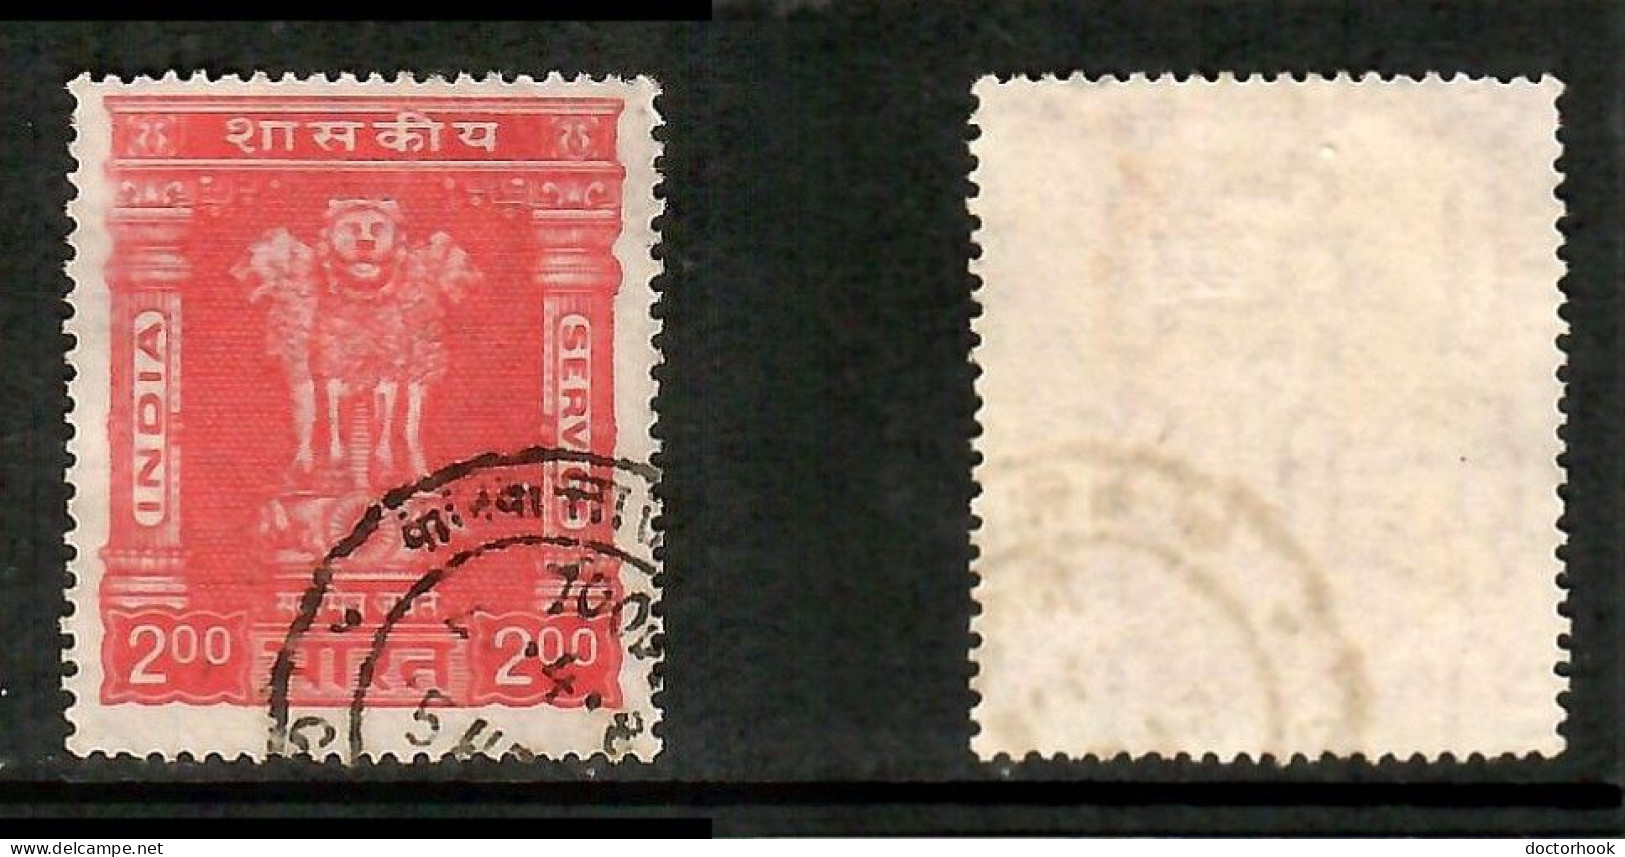 INDIA Scott # O 183 USED (CONDITION PER SCAN) (Stamp Scan # 1034-14) - Dienstzegels